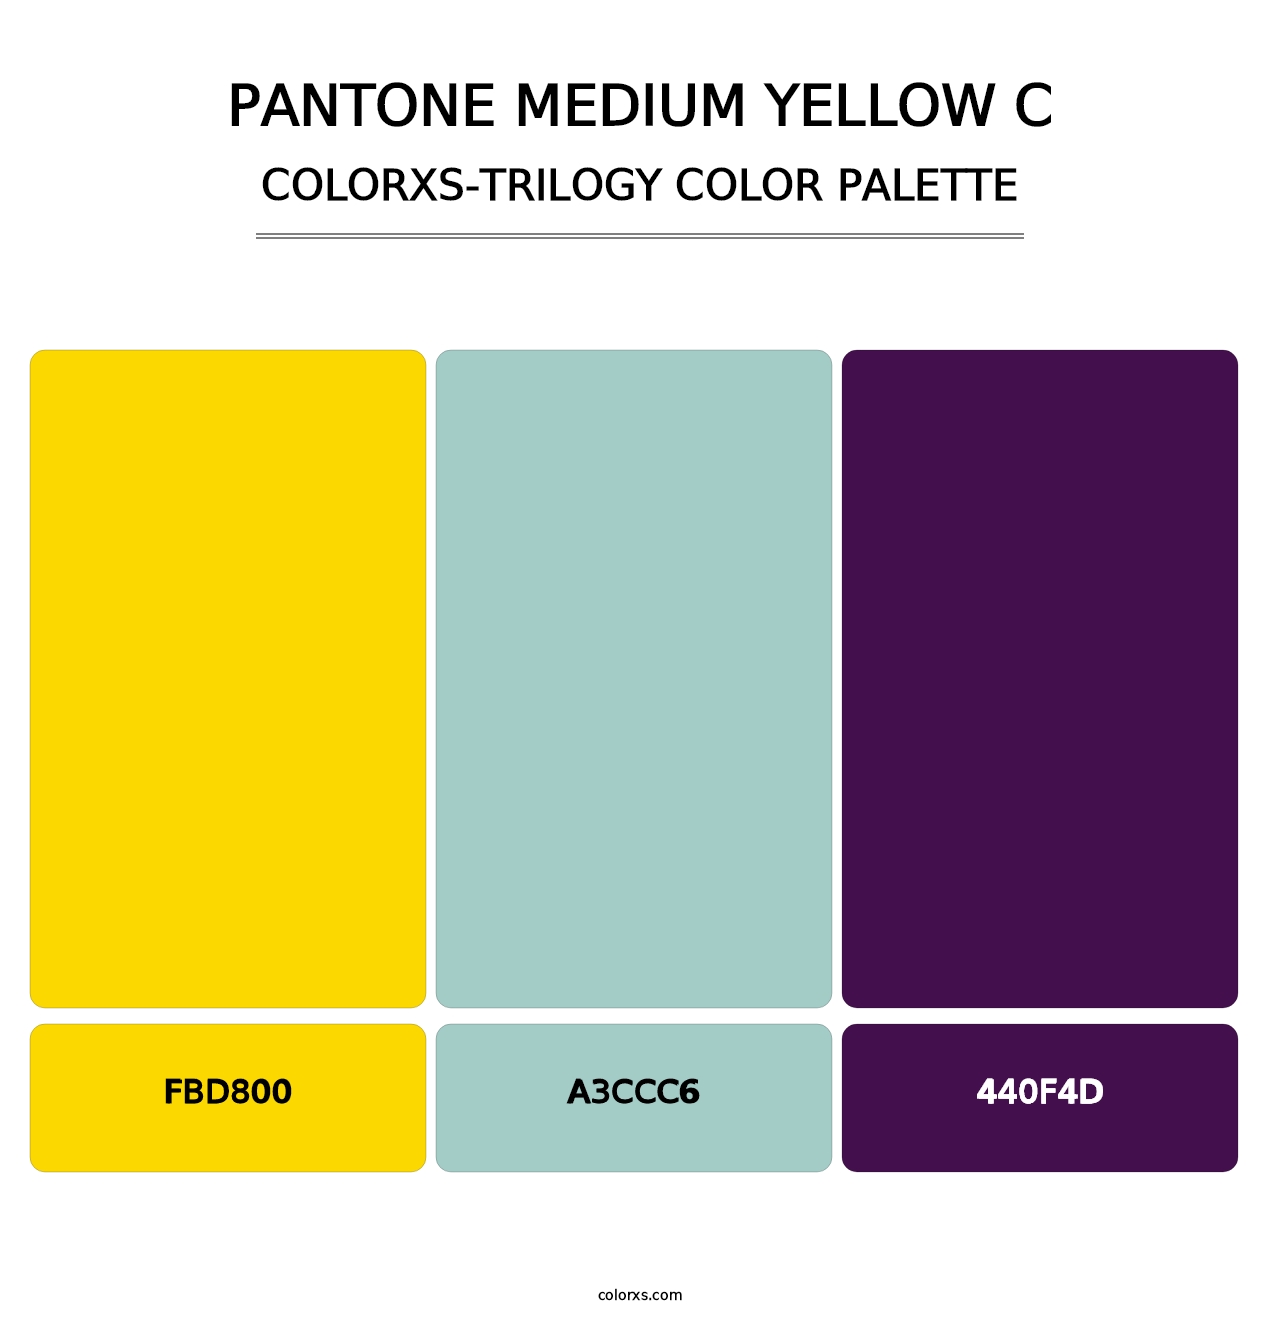 PANTONE Medium Yellow C - Colorxs Trilogy Palette